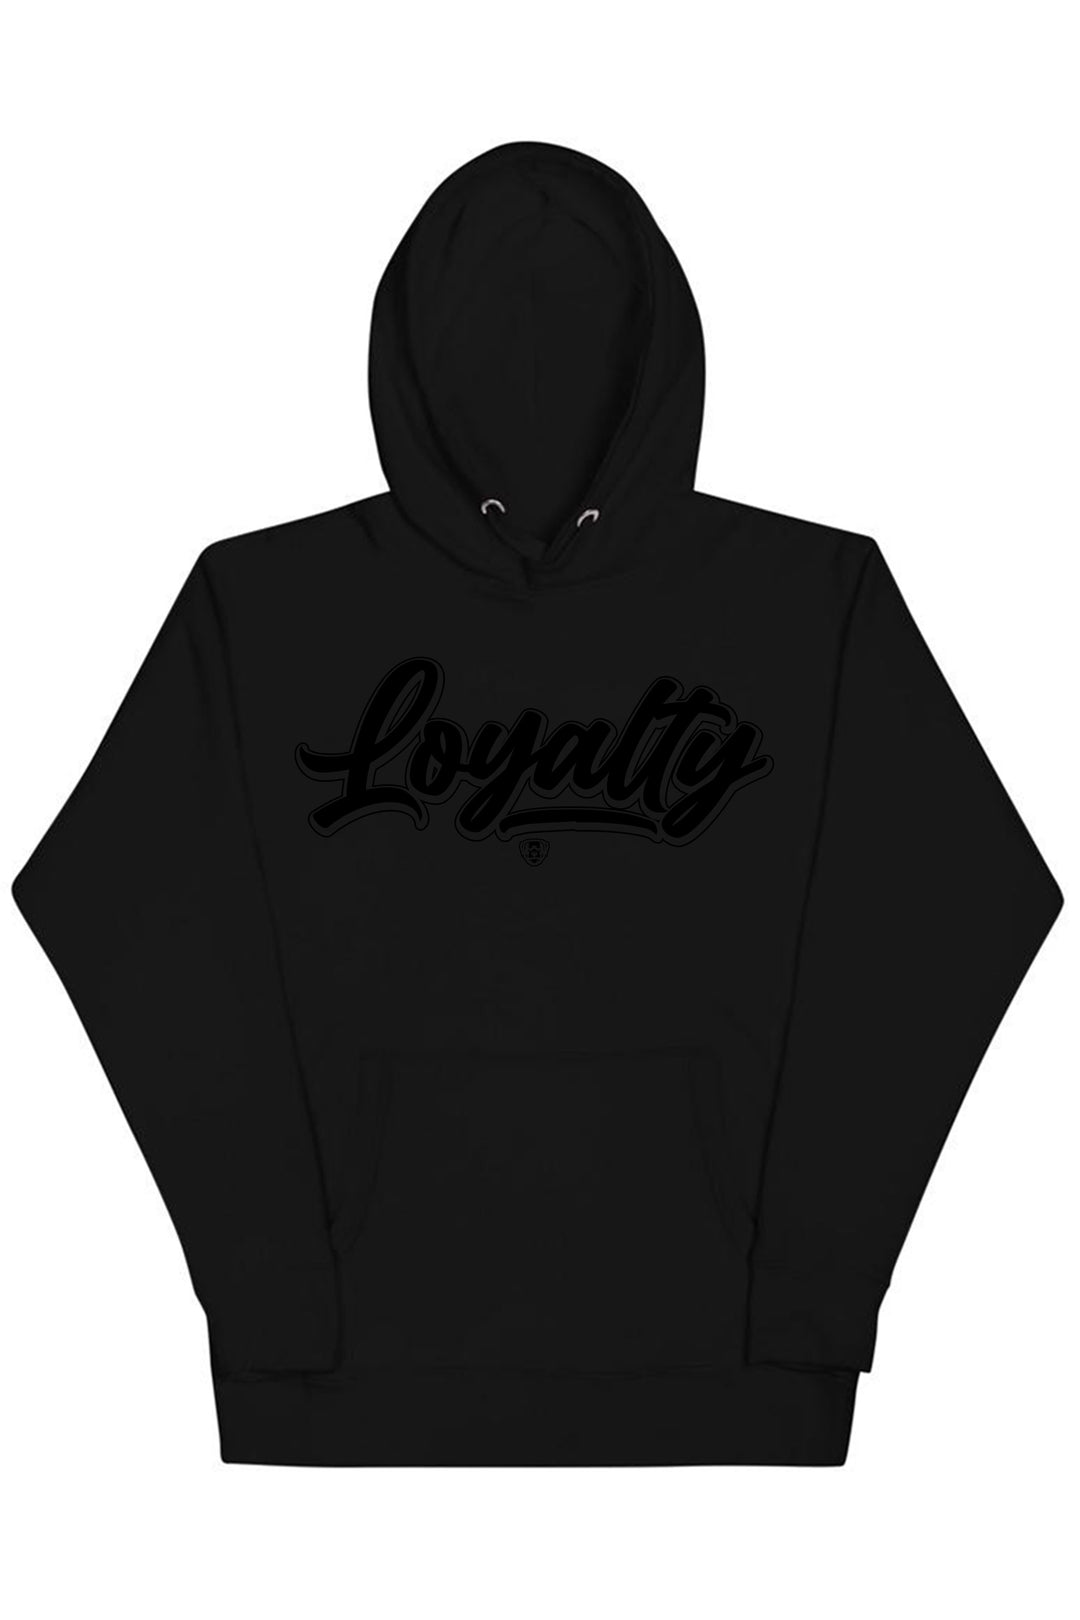 Loyalty Hoodie (Black Logo) - Zamage